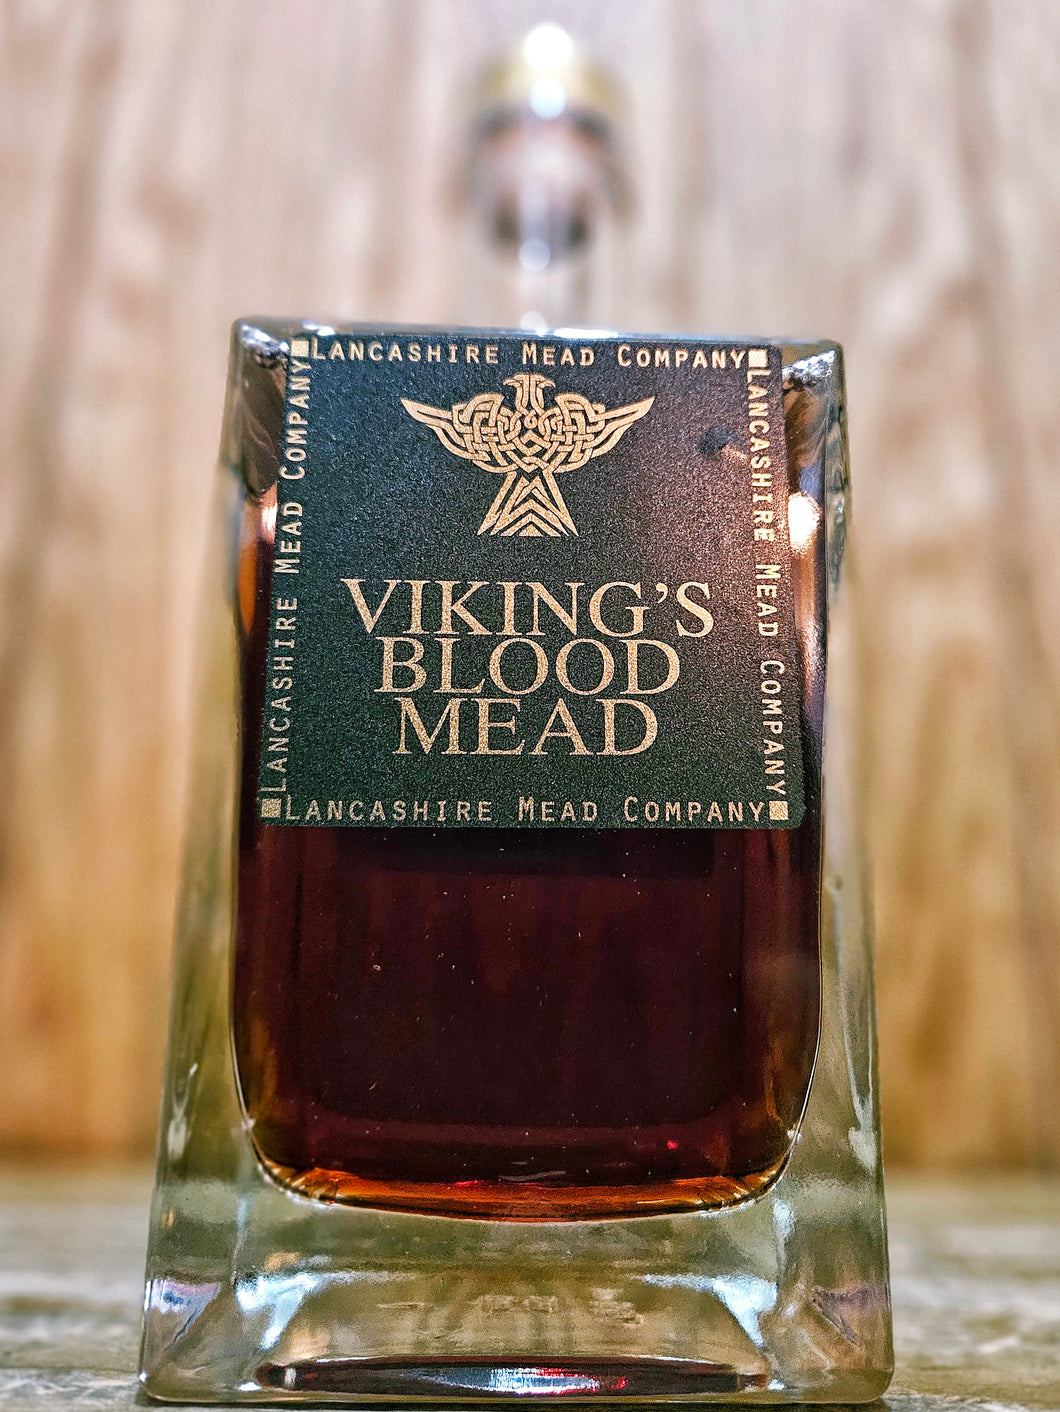 Lancashire Mead Company - Vikings Blood